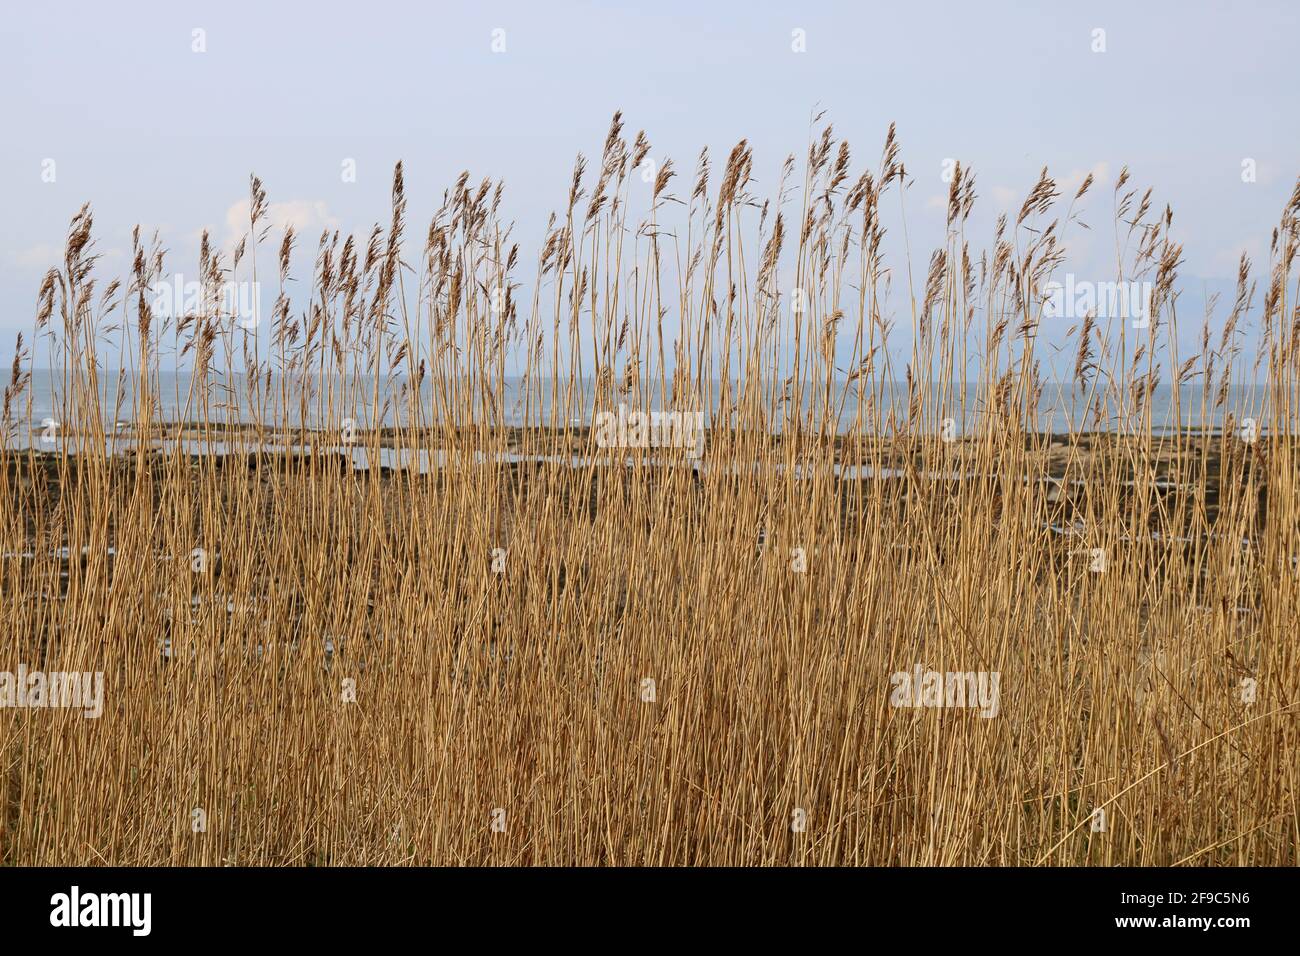 Reeds growing at a coastal beach location Stock Photo